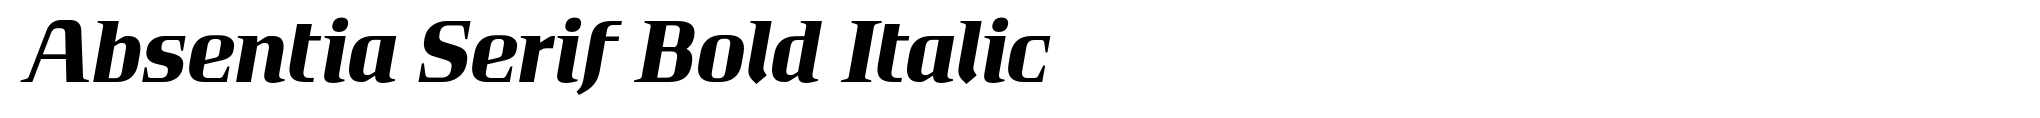 Absentia Serif Bold Italic image